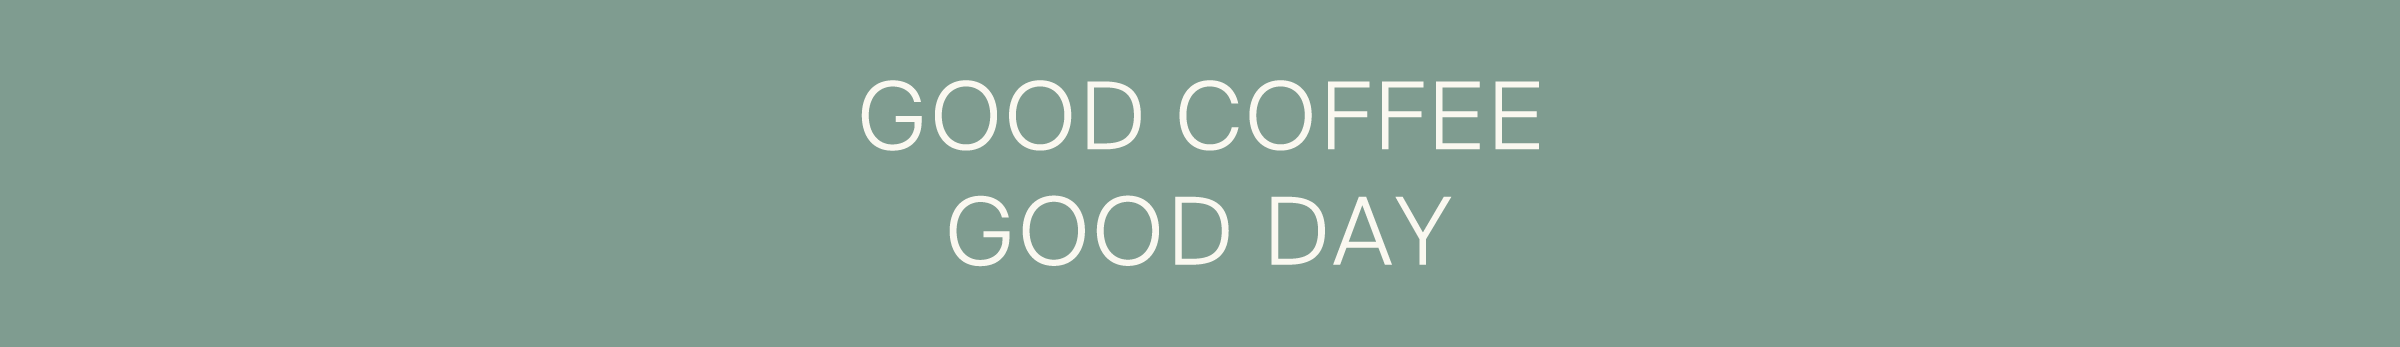 GOOD COFFEE GOOD DAY